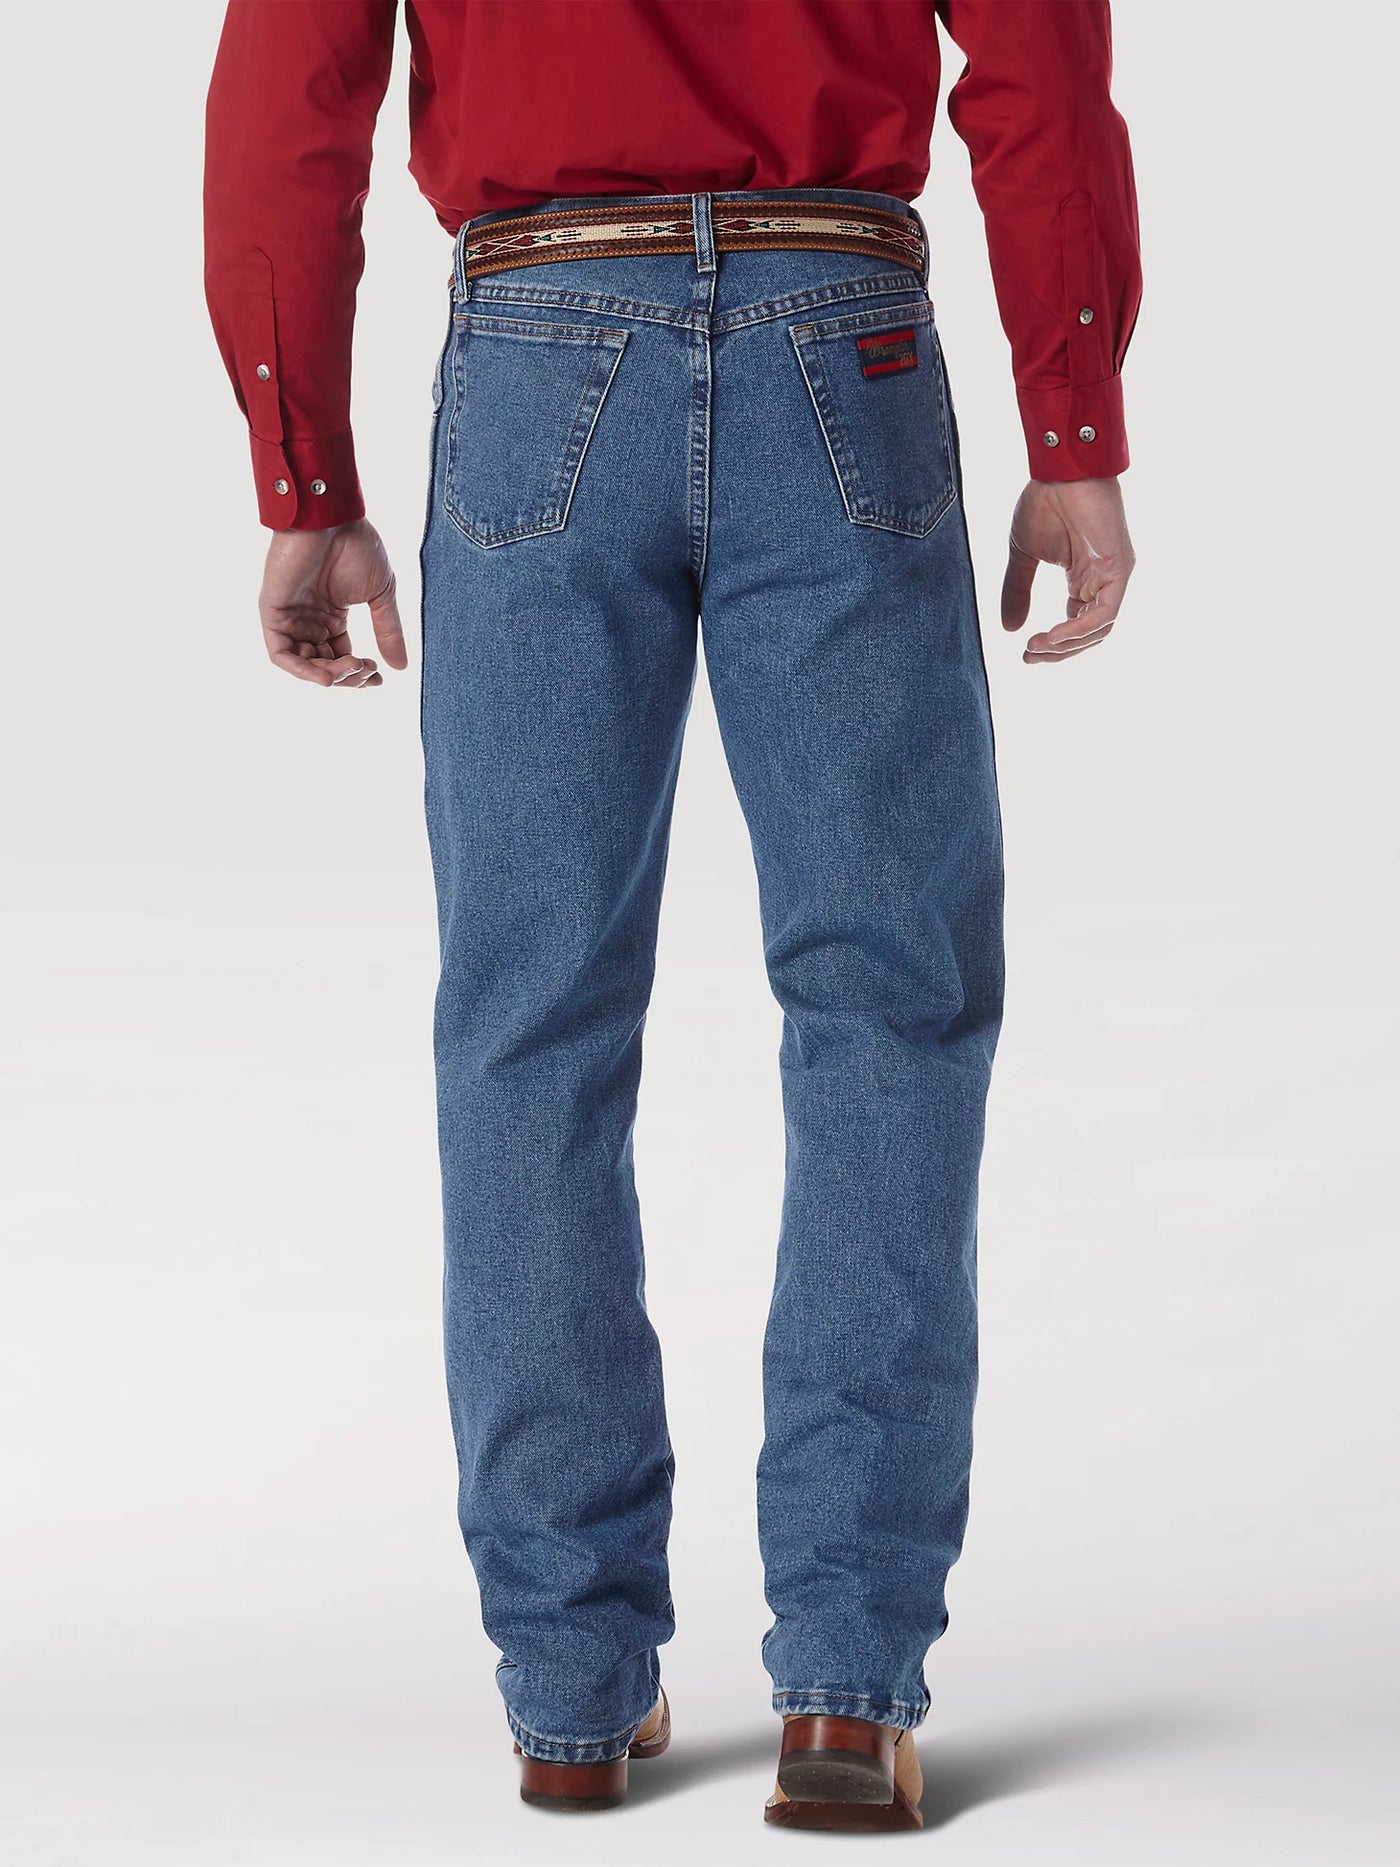 Wrangler Men's 20X No. 22 Original Fit Jeans